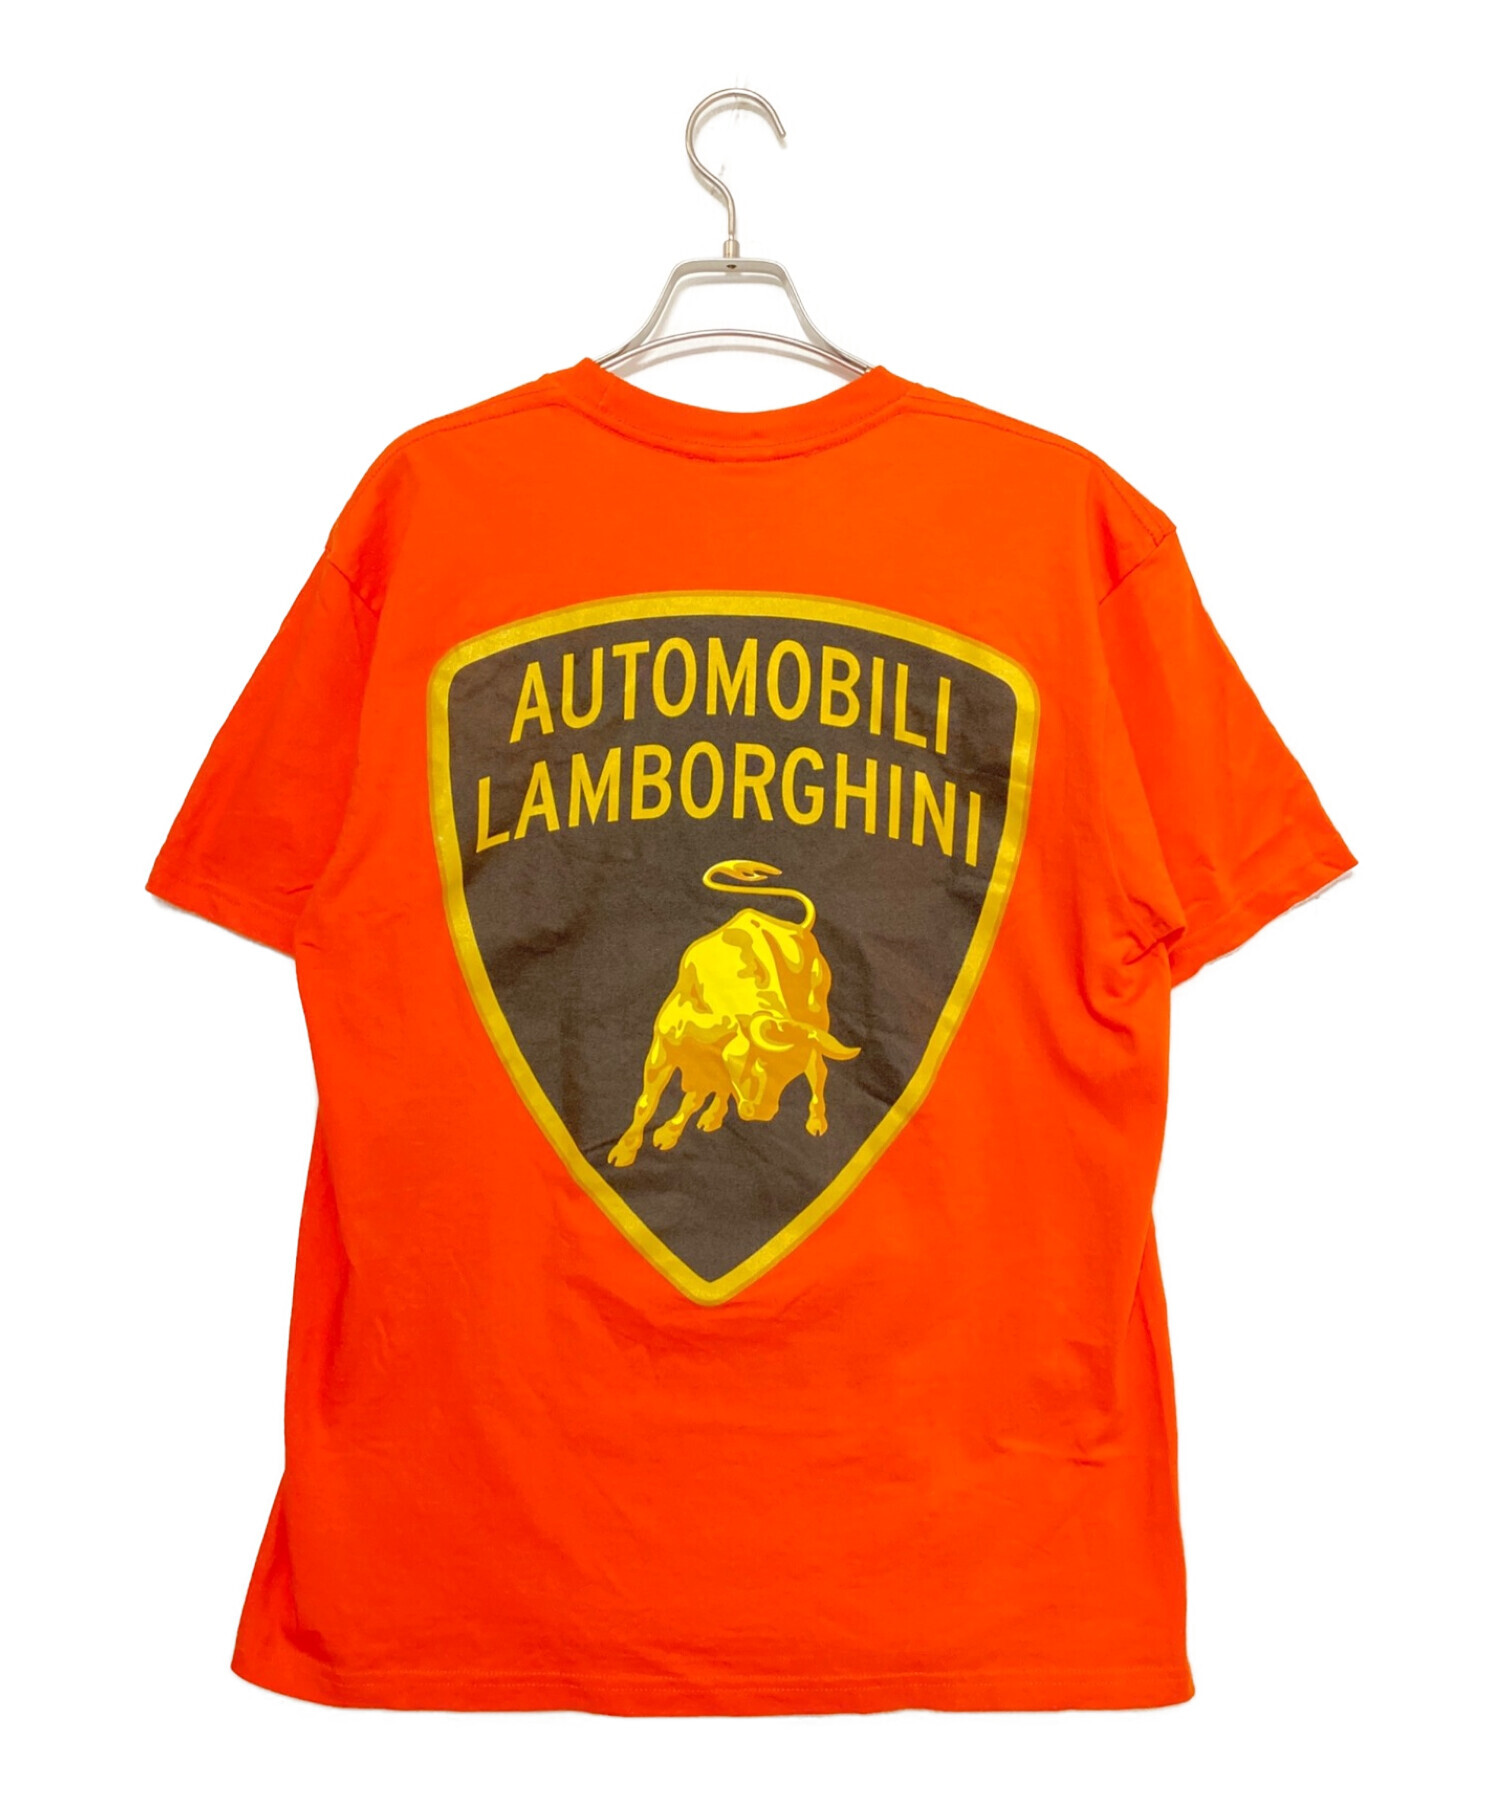 WhiteSIZESupreme®/Automobili Lamborghini Tee